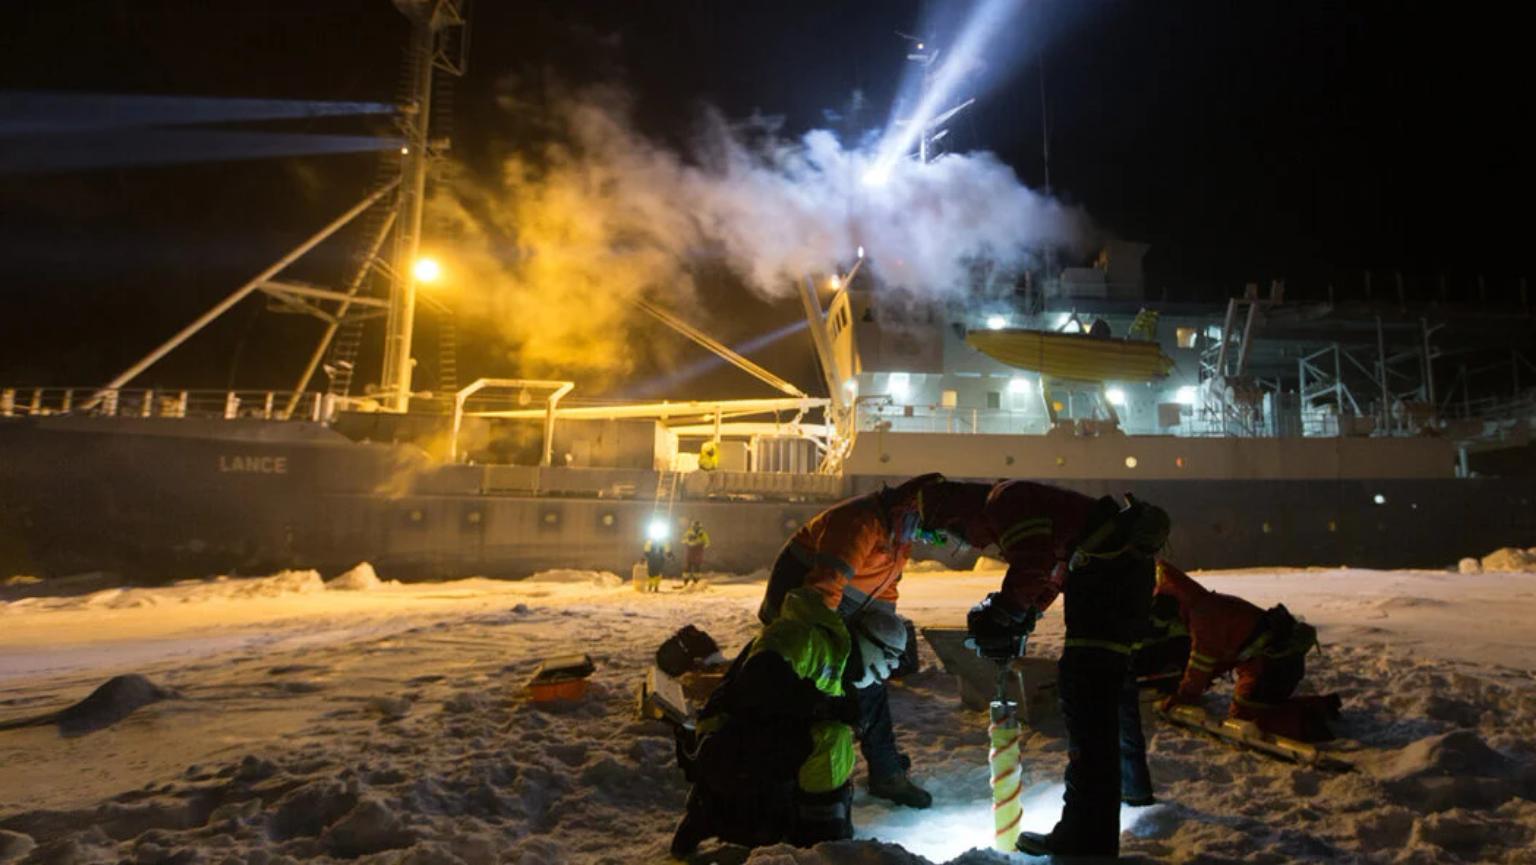 FF Kronprins Haakon ice-class research vessel.